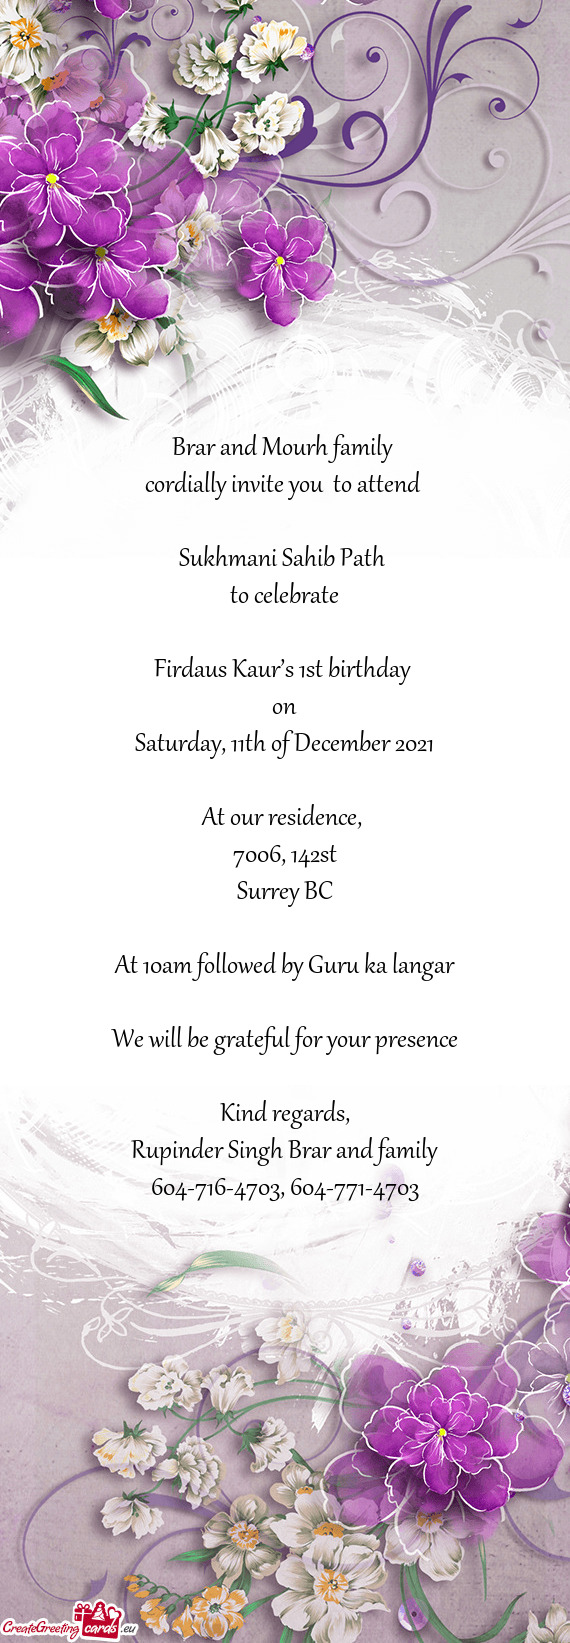 Firdaus Kaur’s 1st birthday